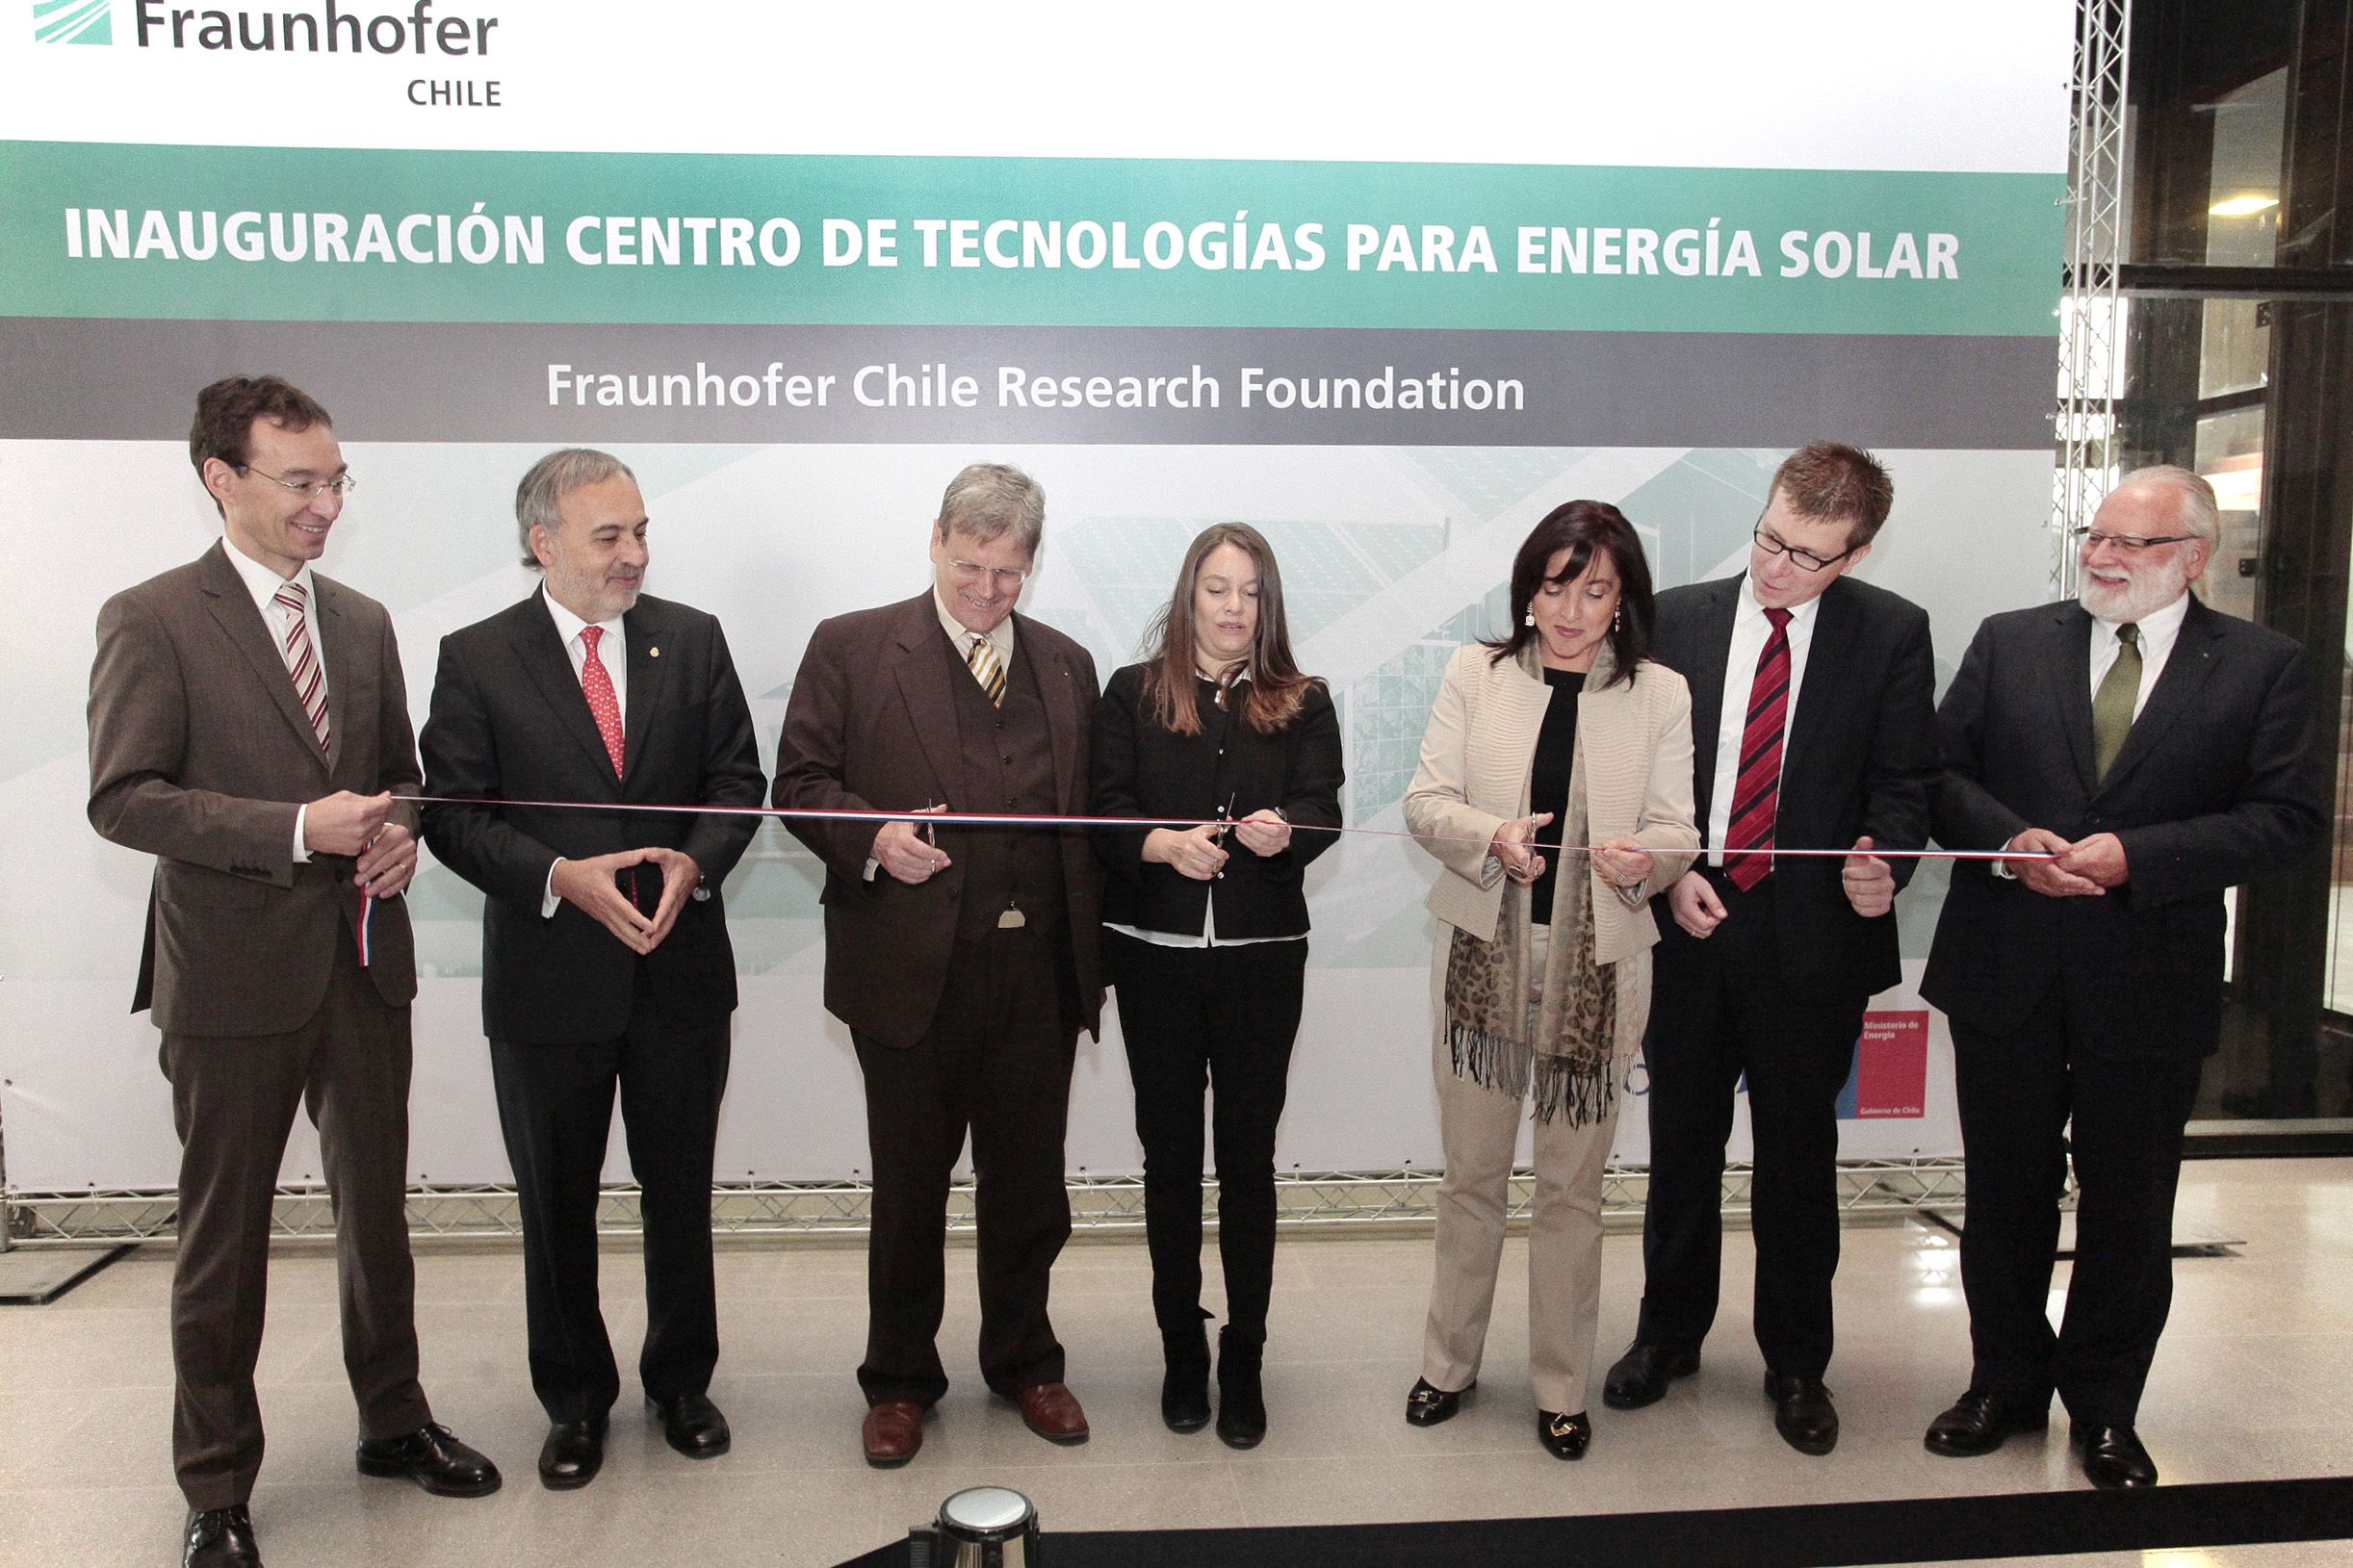 Die offizielle Einweihung des Fraunhofer Chile Research Center for Solar Energy Technologies (FCR-CSET) in Santiago de Chile 